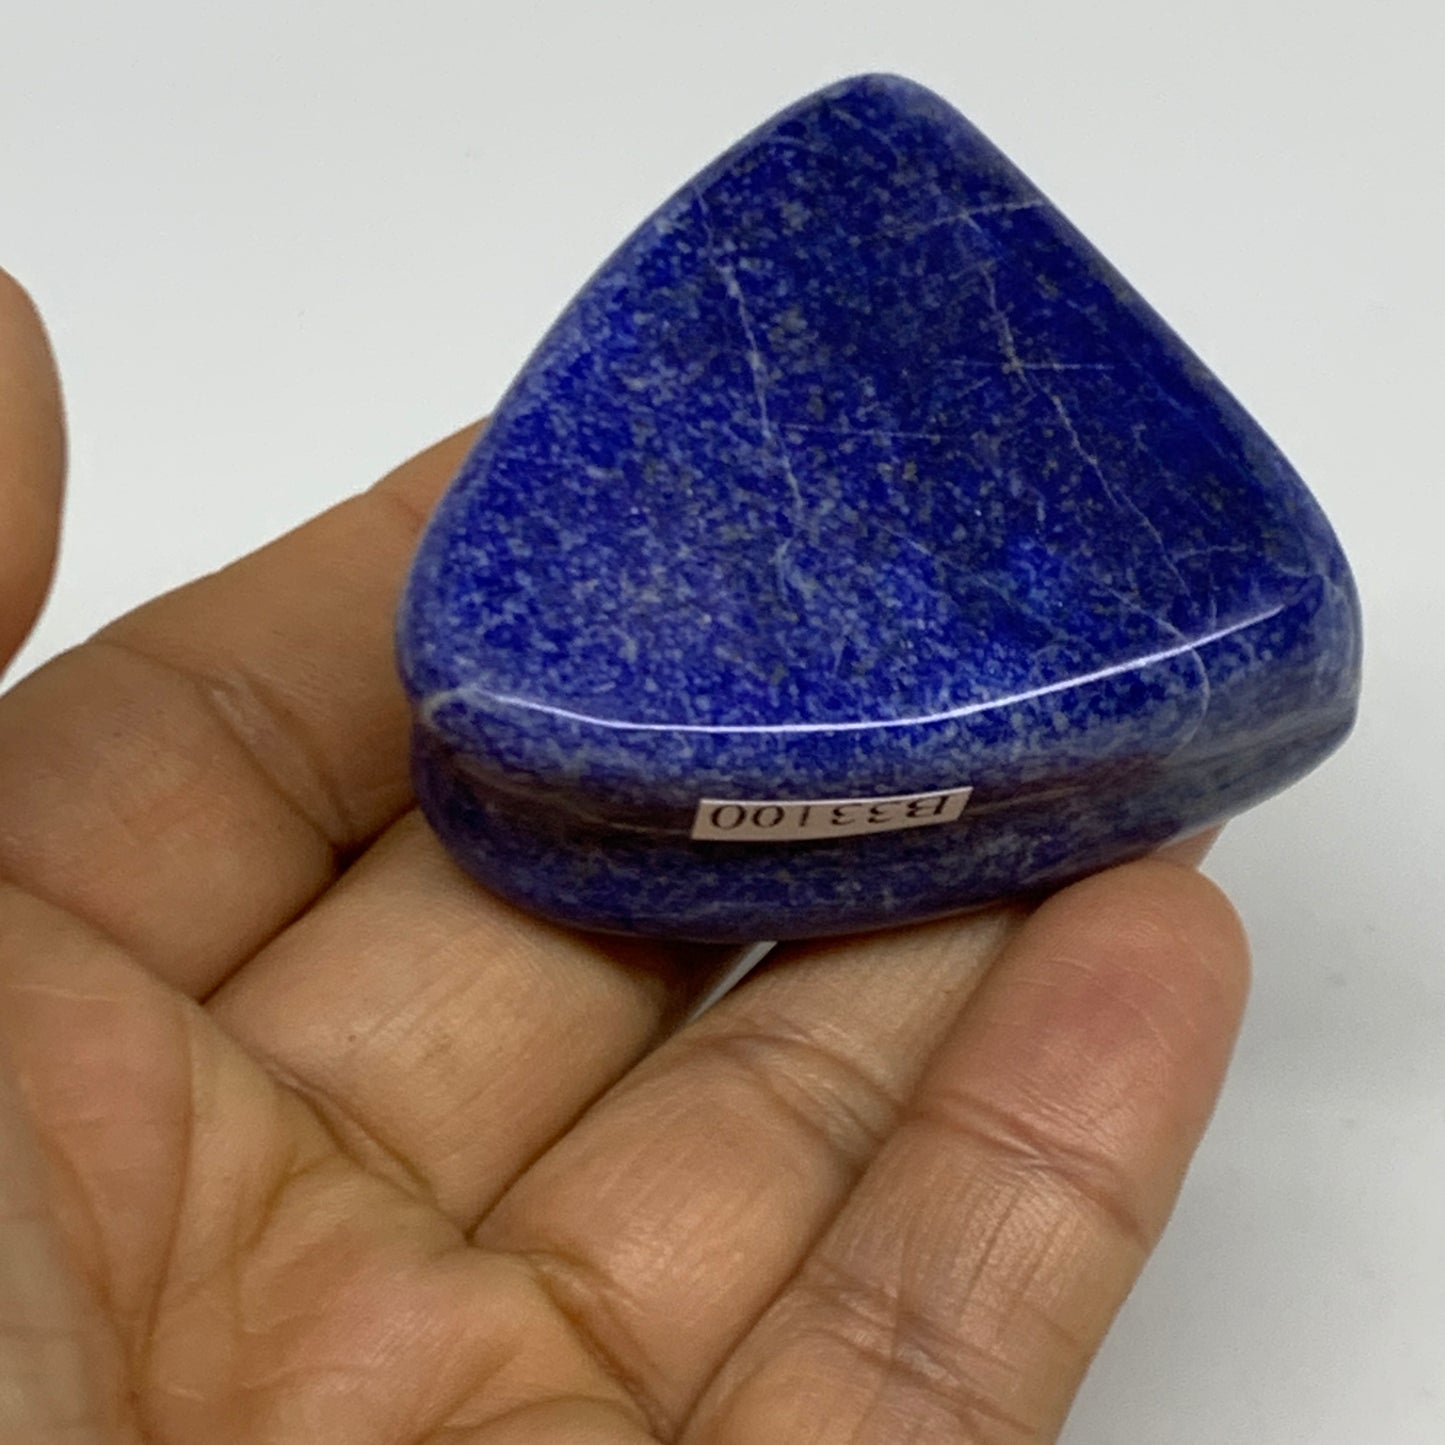 90.8g, 1.8"x1.8"x0.9",  Natural Freeform Lapis Lazuli from Afghanistan, B33100